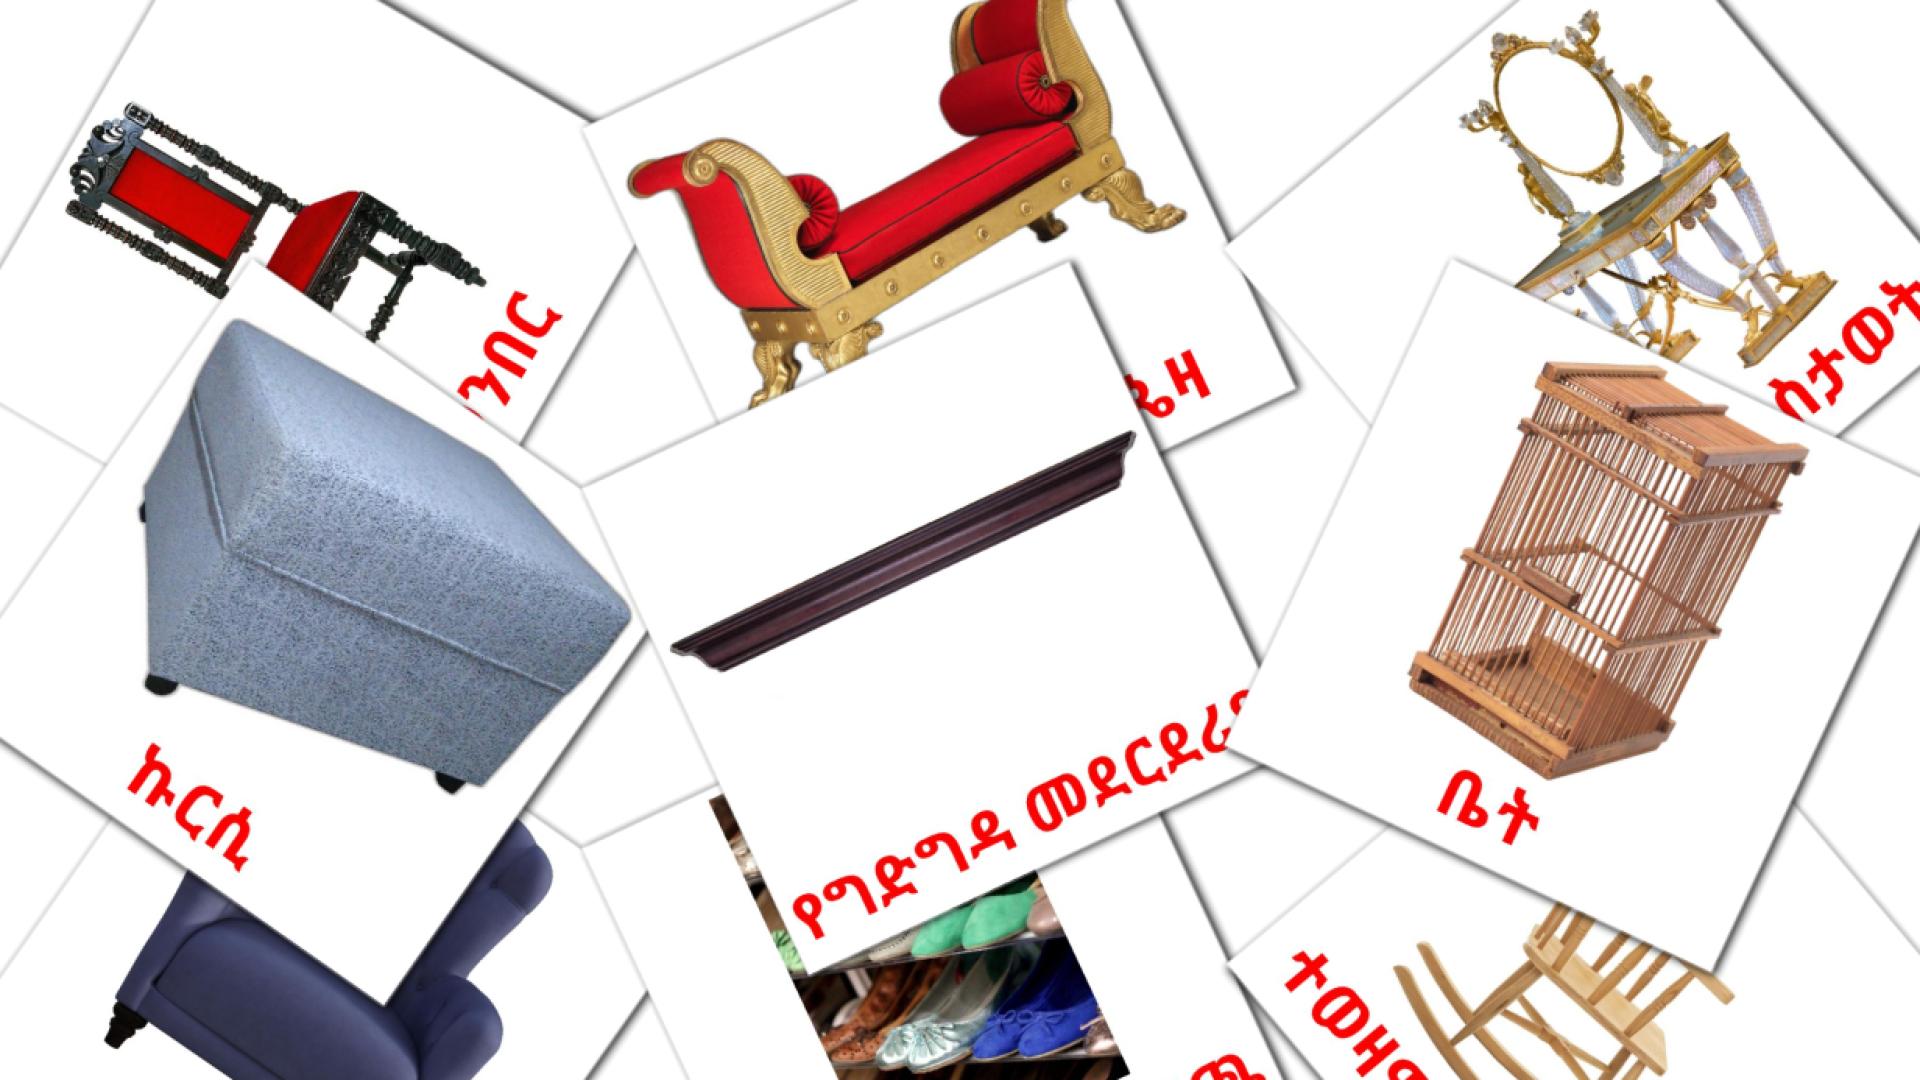 Furniture - amharic vocabulary cards